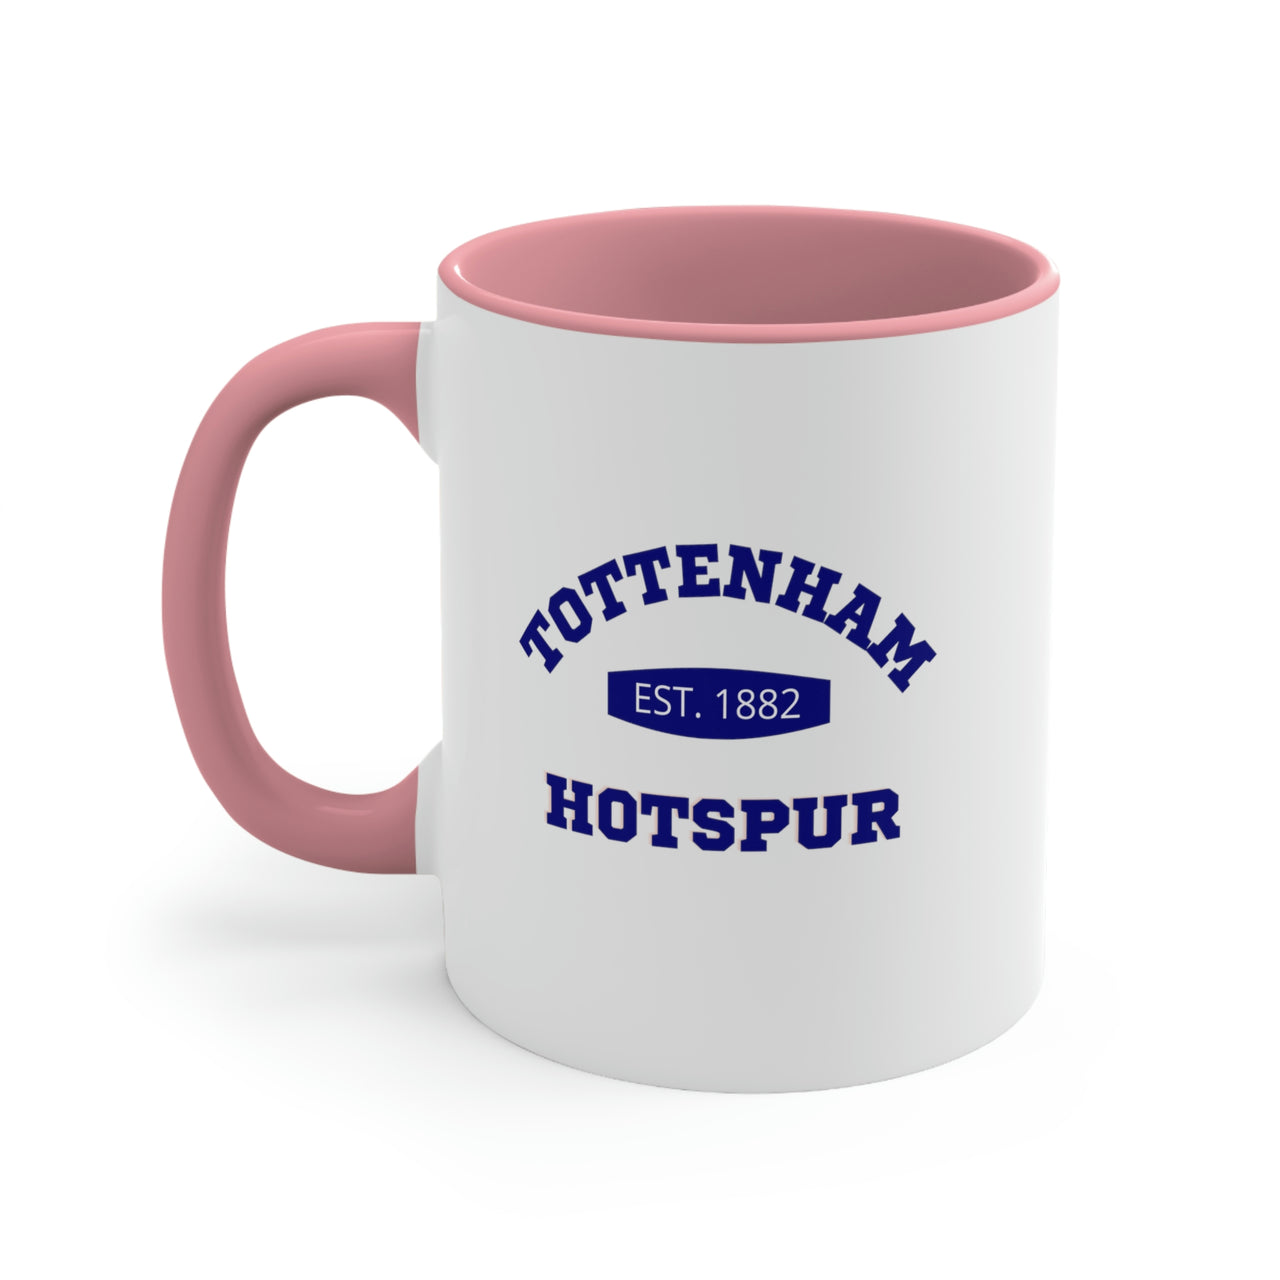 Tottenham Hotspurs Coffee Mug, 11oz